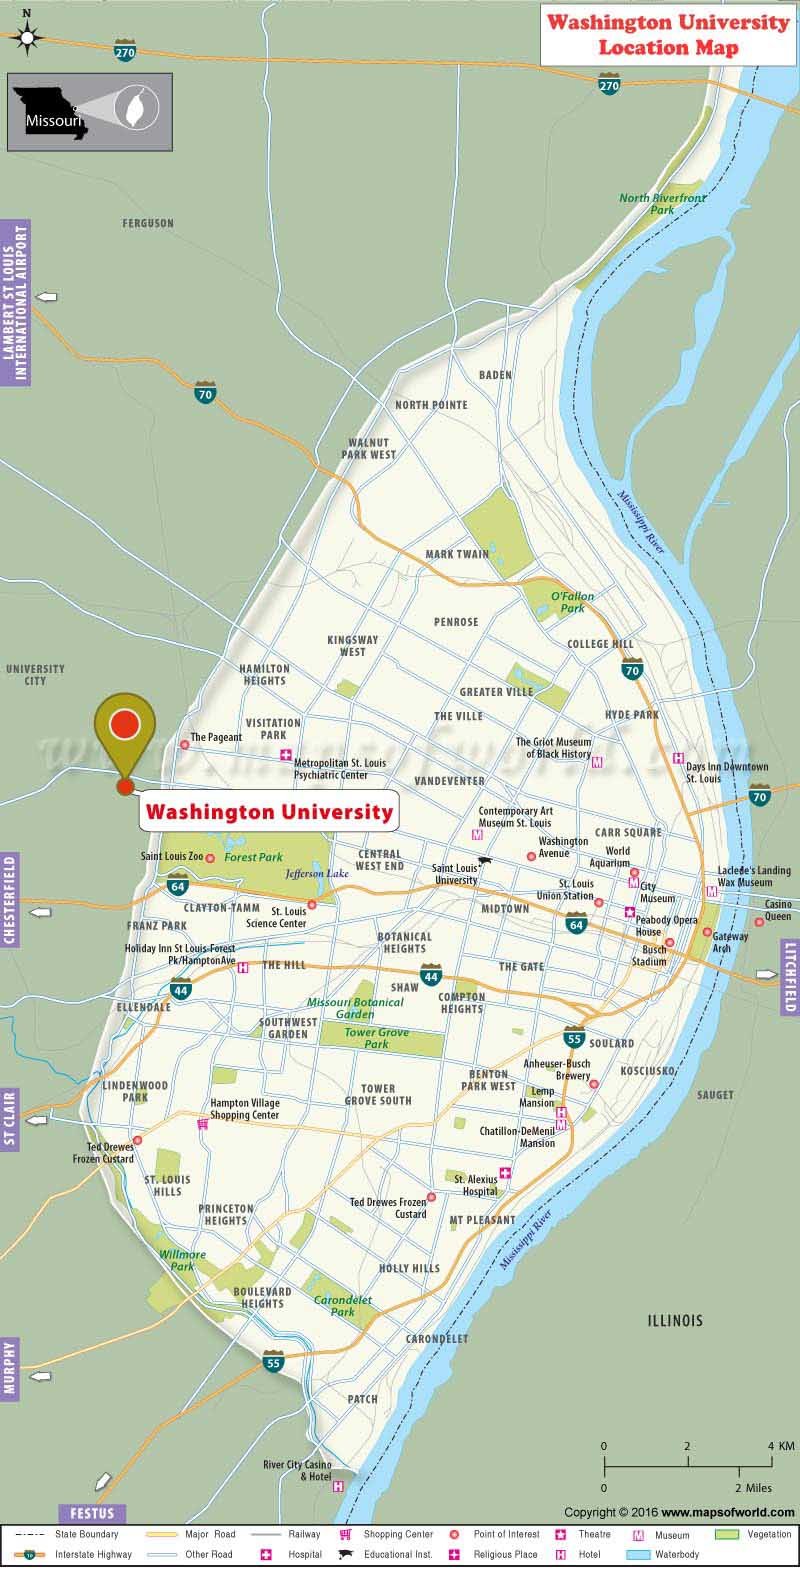 Washington University Location Map Fees Majors Academic Achievements History Us Universities Tour